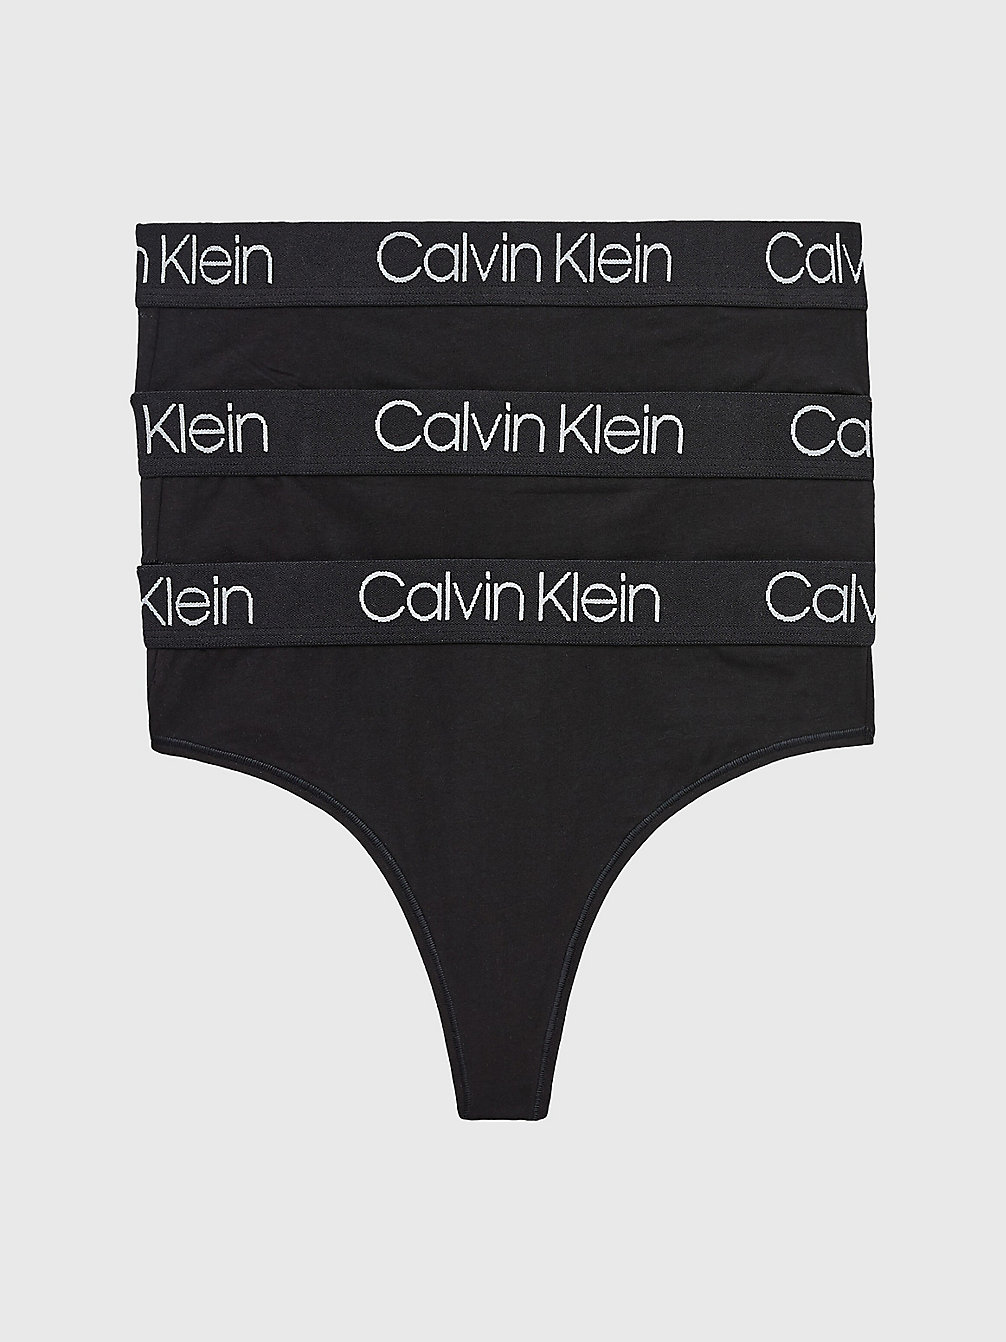 BLACK/ BLACK/ BLACK Lot De 3 Strings Taille Haute - Body undefined femmes Calvin Klein